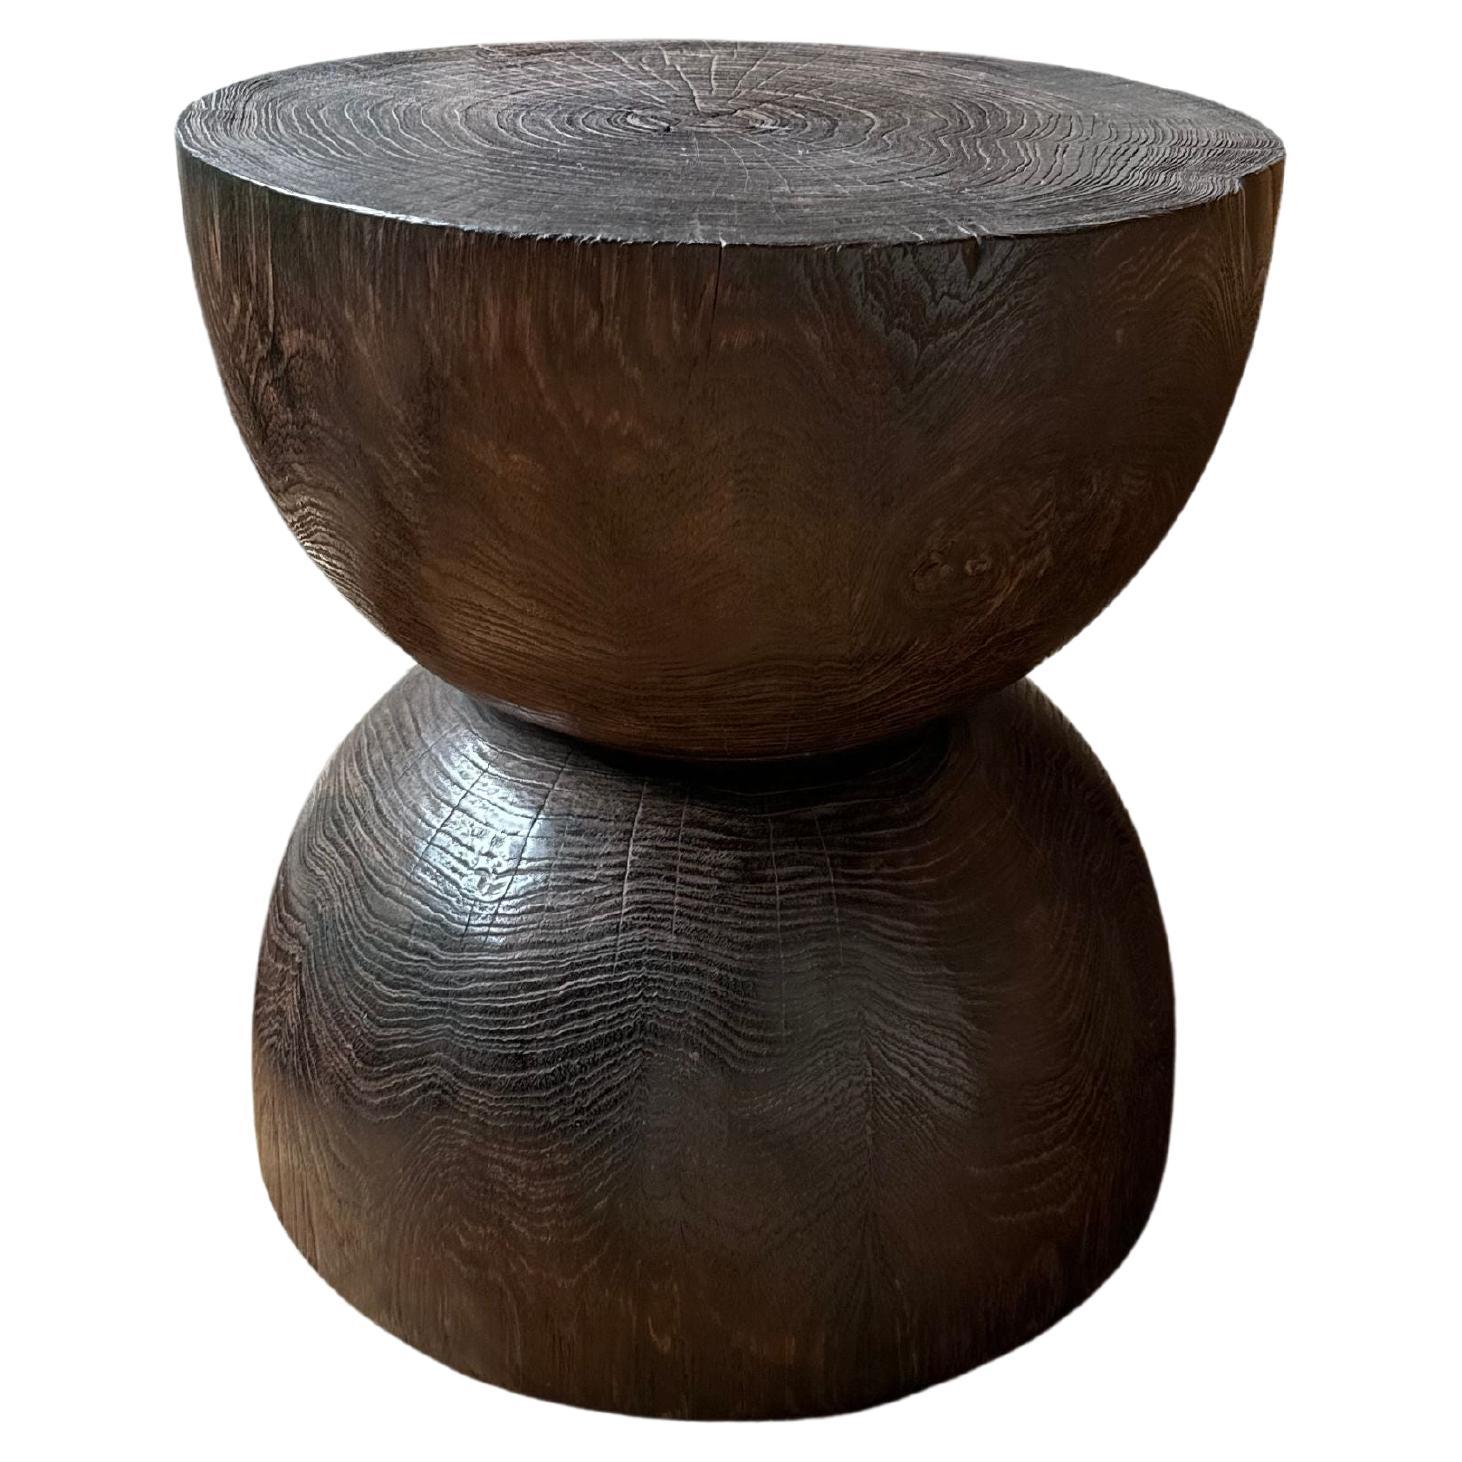 Round Teak Wood Side Table, Burnt Finish, Hour Glass Design, Modern Organic For Sale